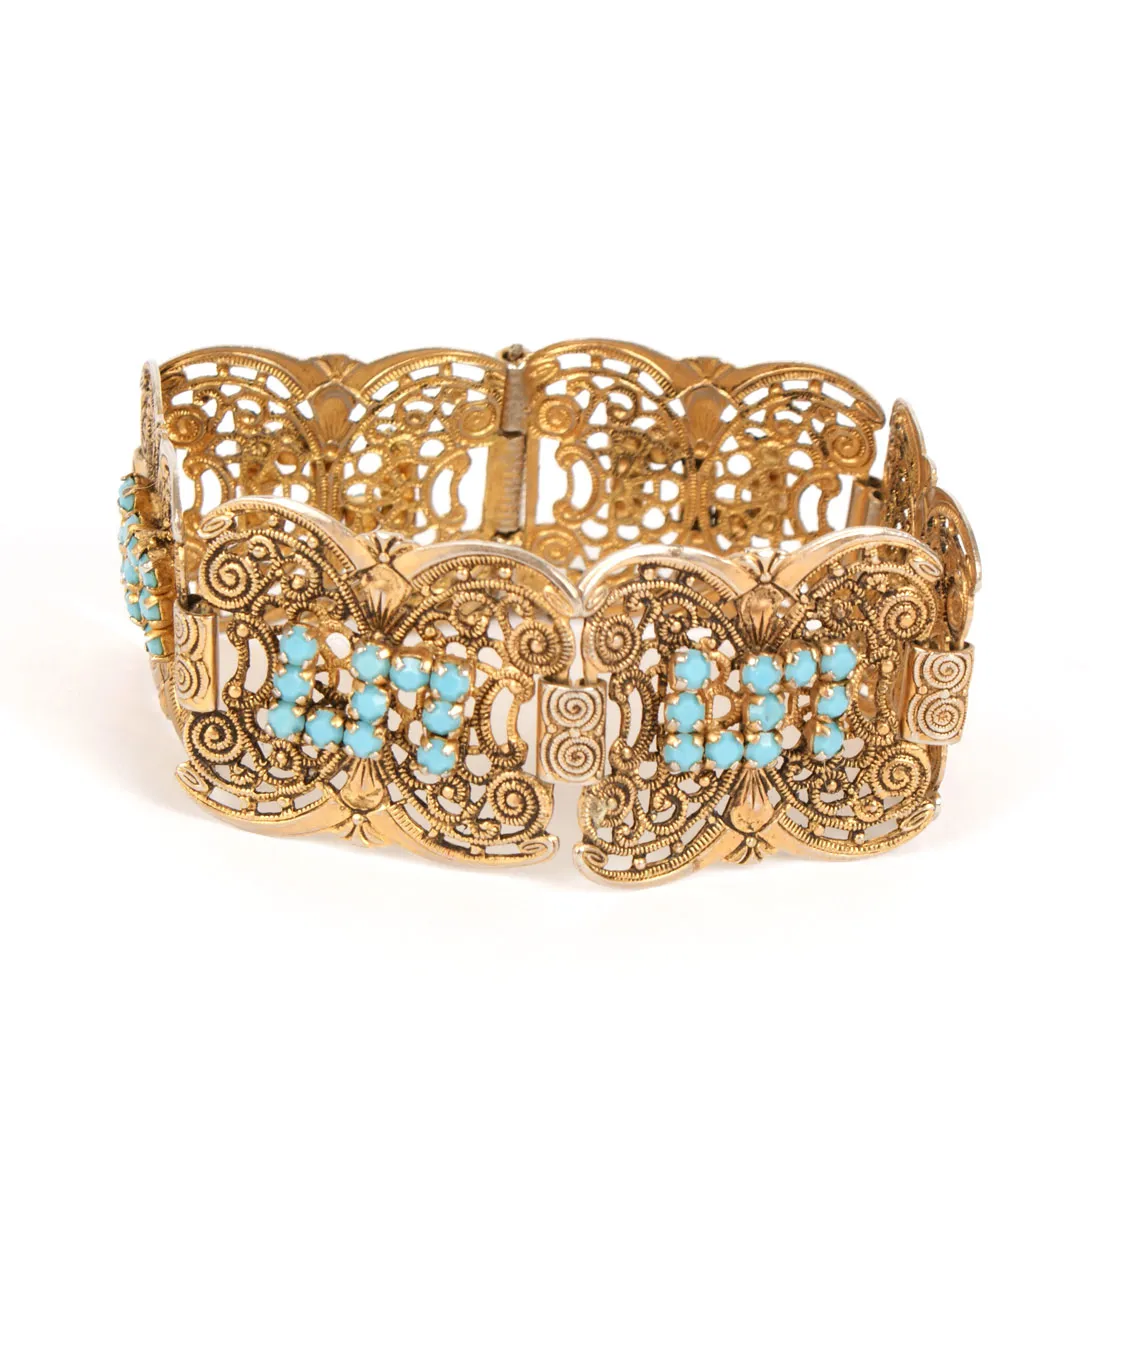 Gold and turquoise filigree bracelet